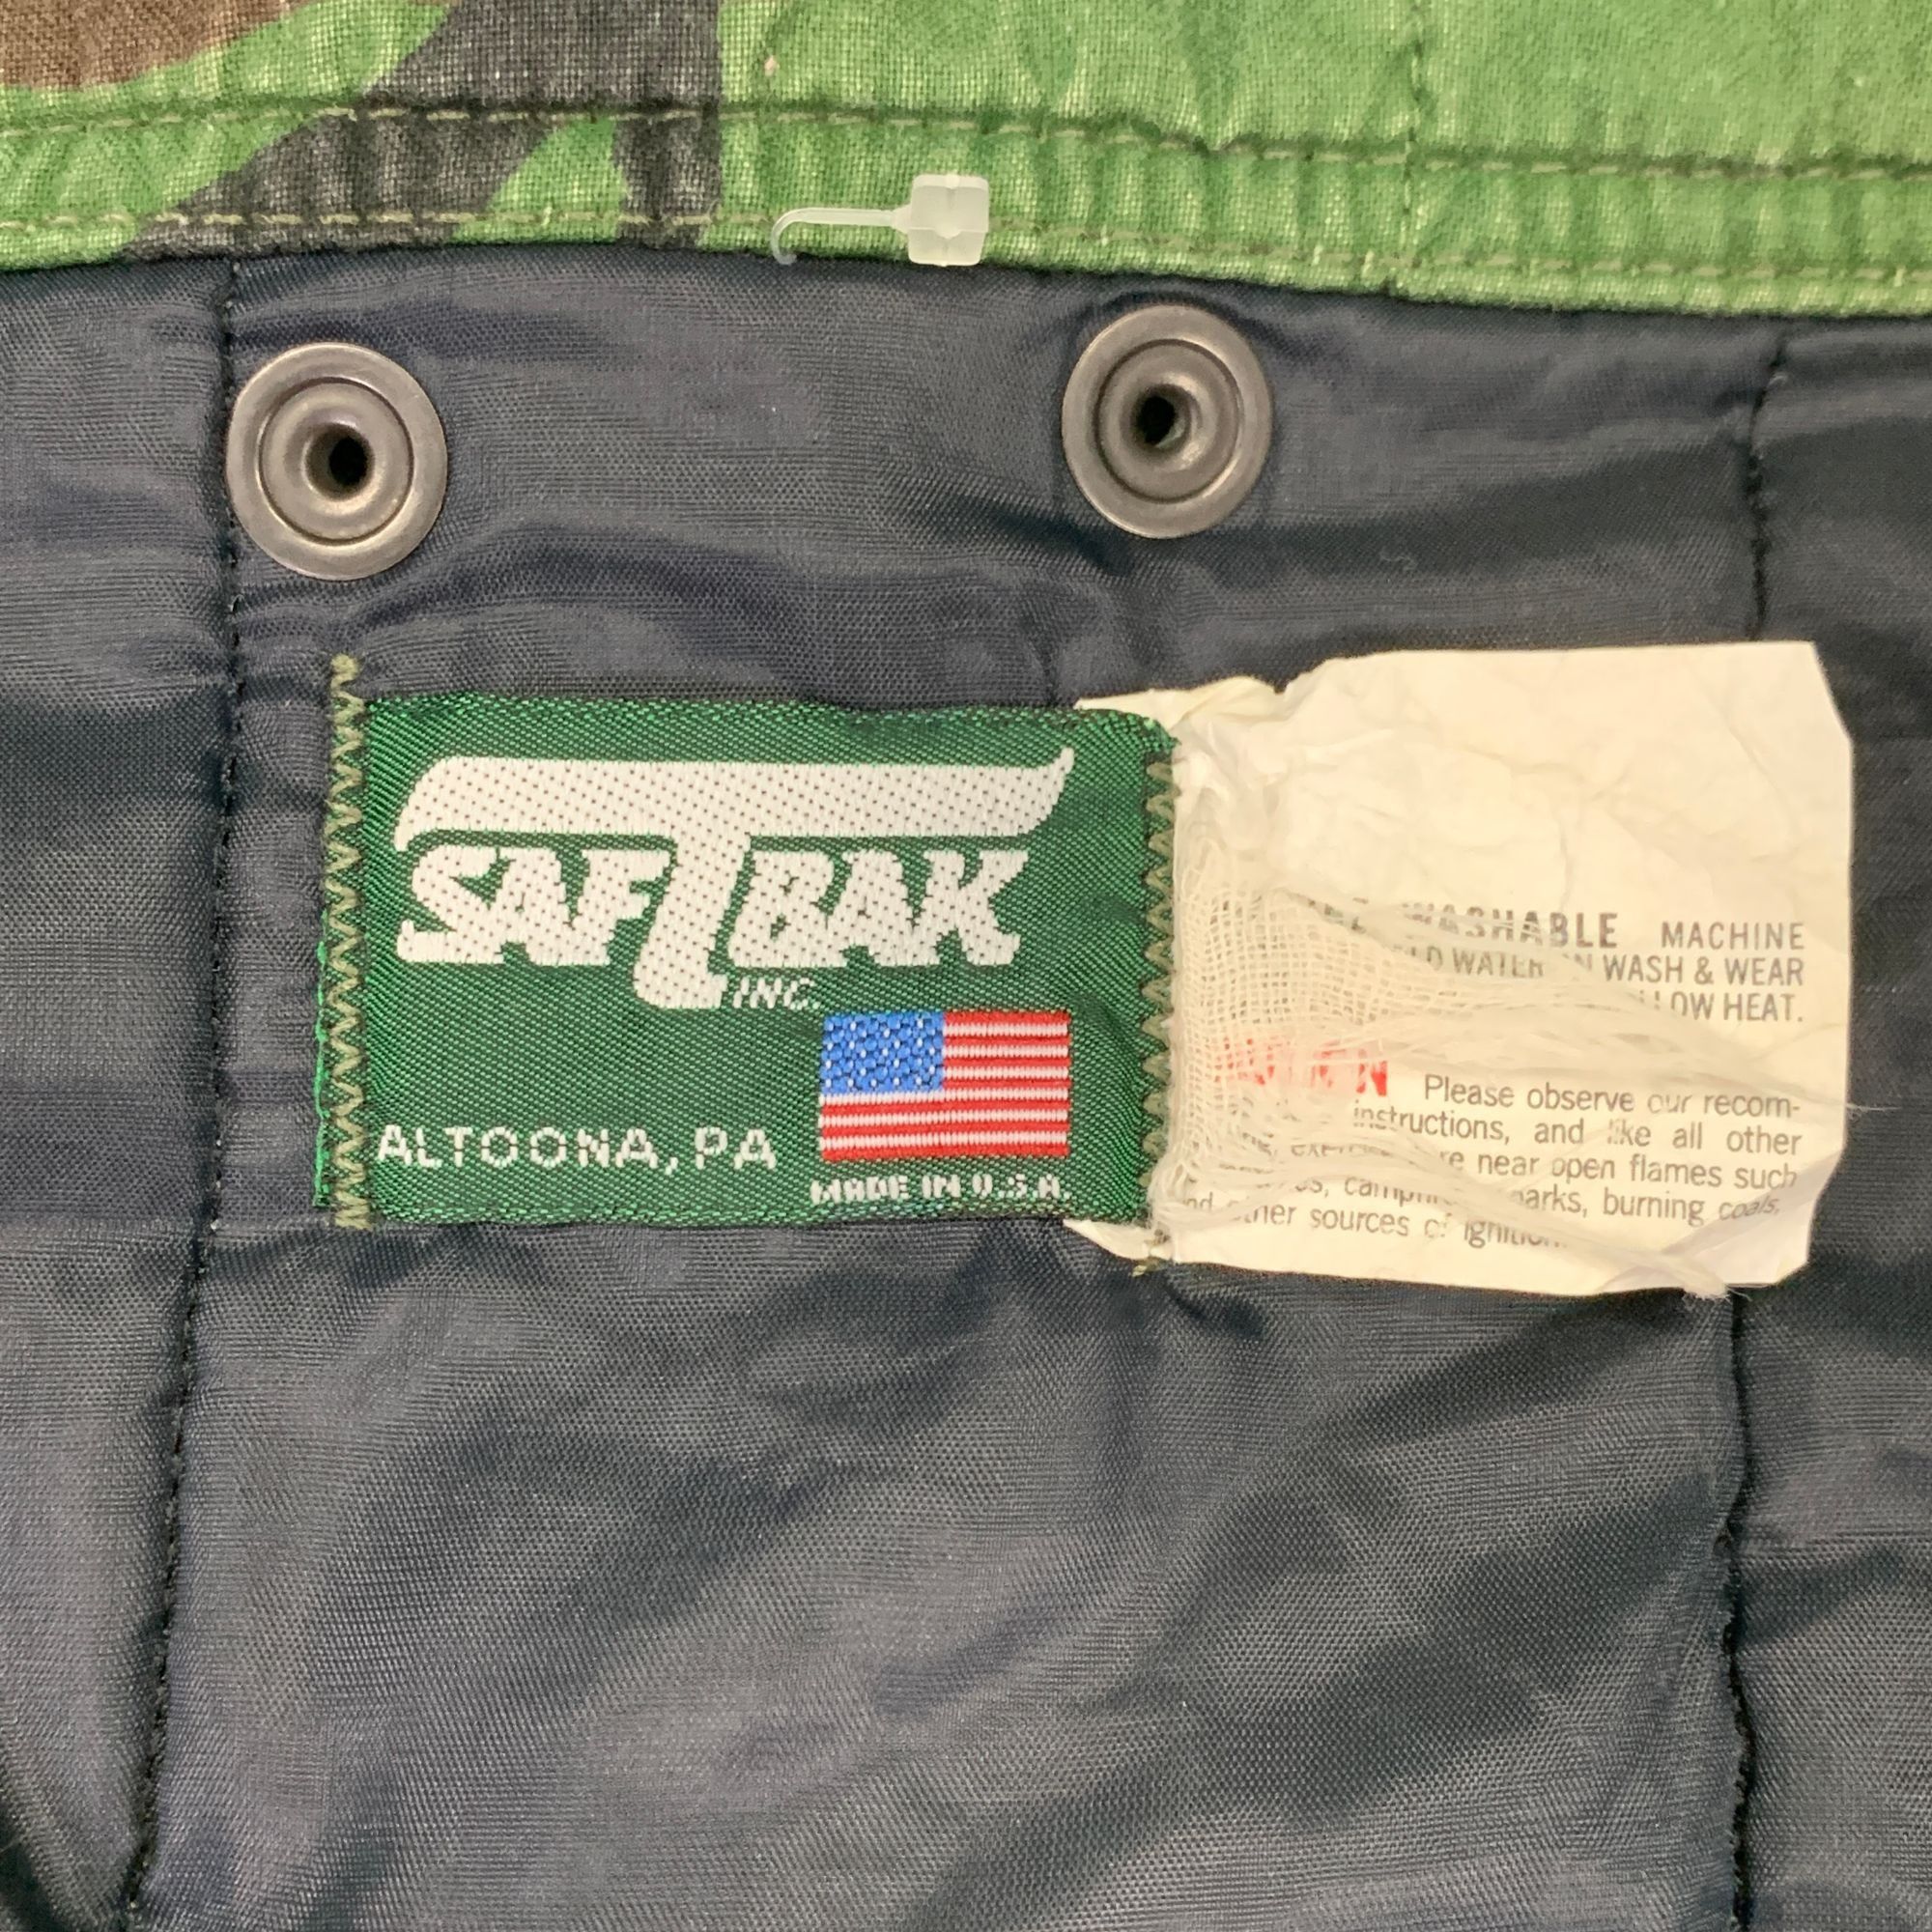 Vintage VTG 80s SAFTBAK Camo Quilted Lined Outdoors Hunting Jacket L Size US L / EU 52-54 / 3 - 5 Thumbnail